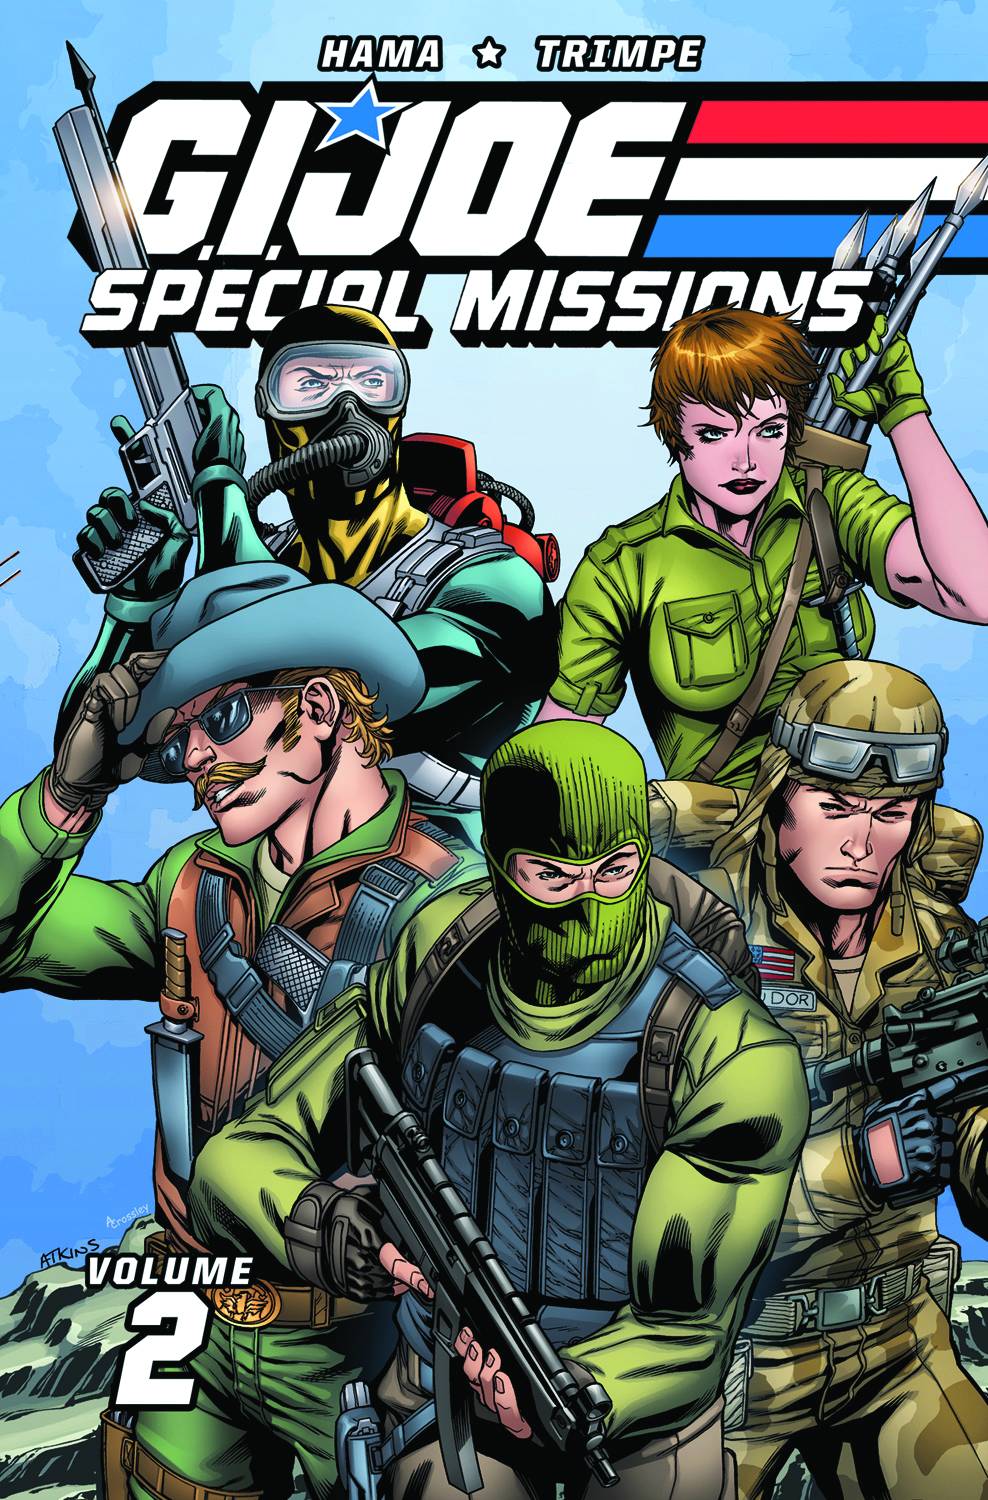 GI Joe Special Missions Graphic Novel Volume 2